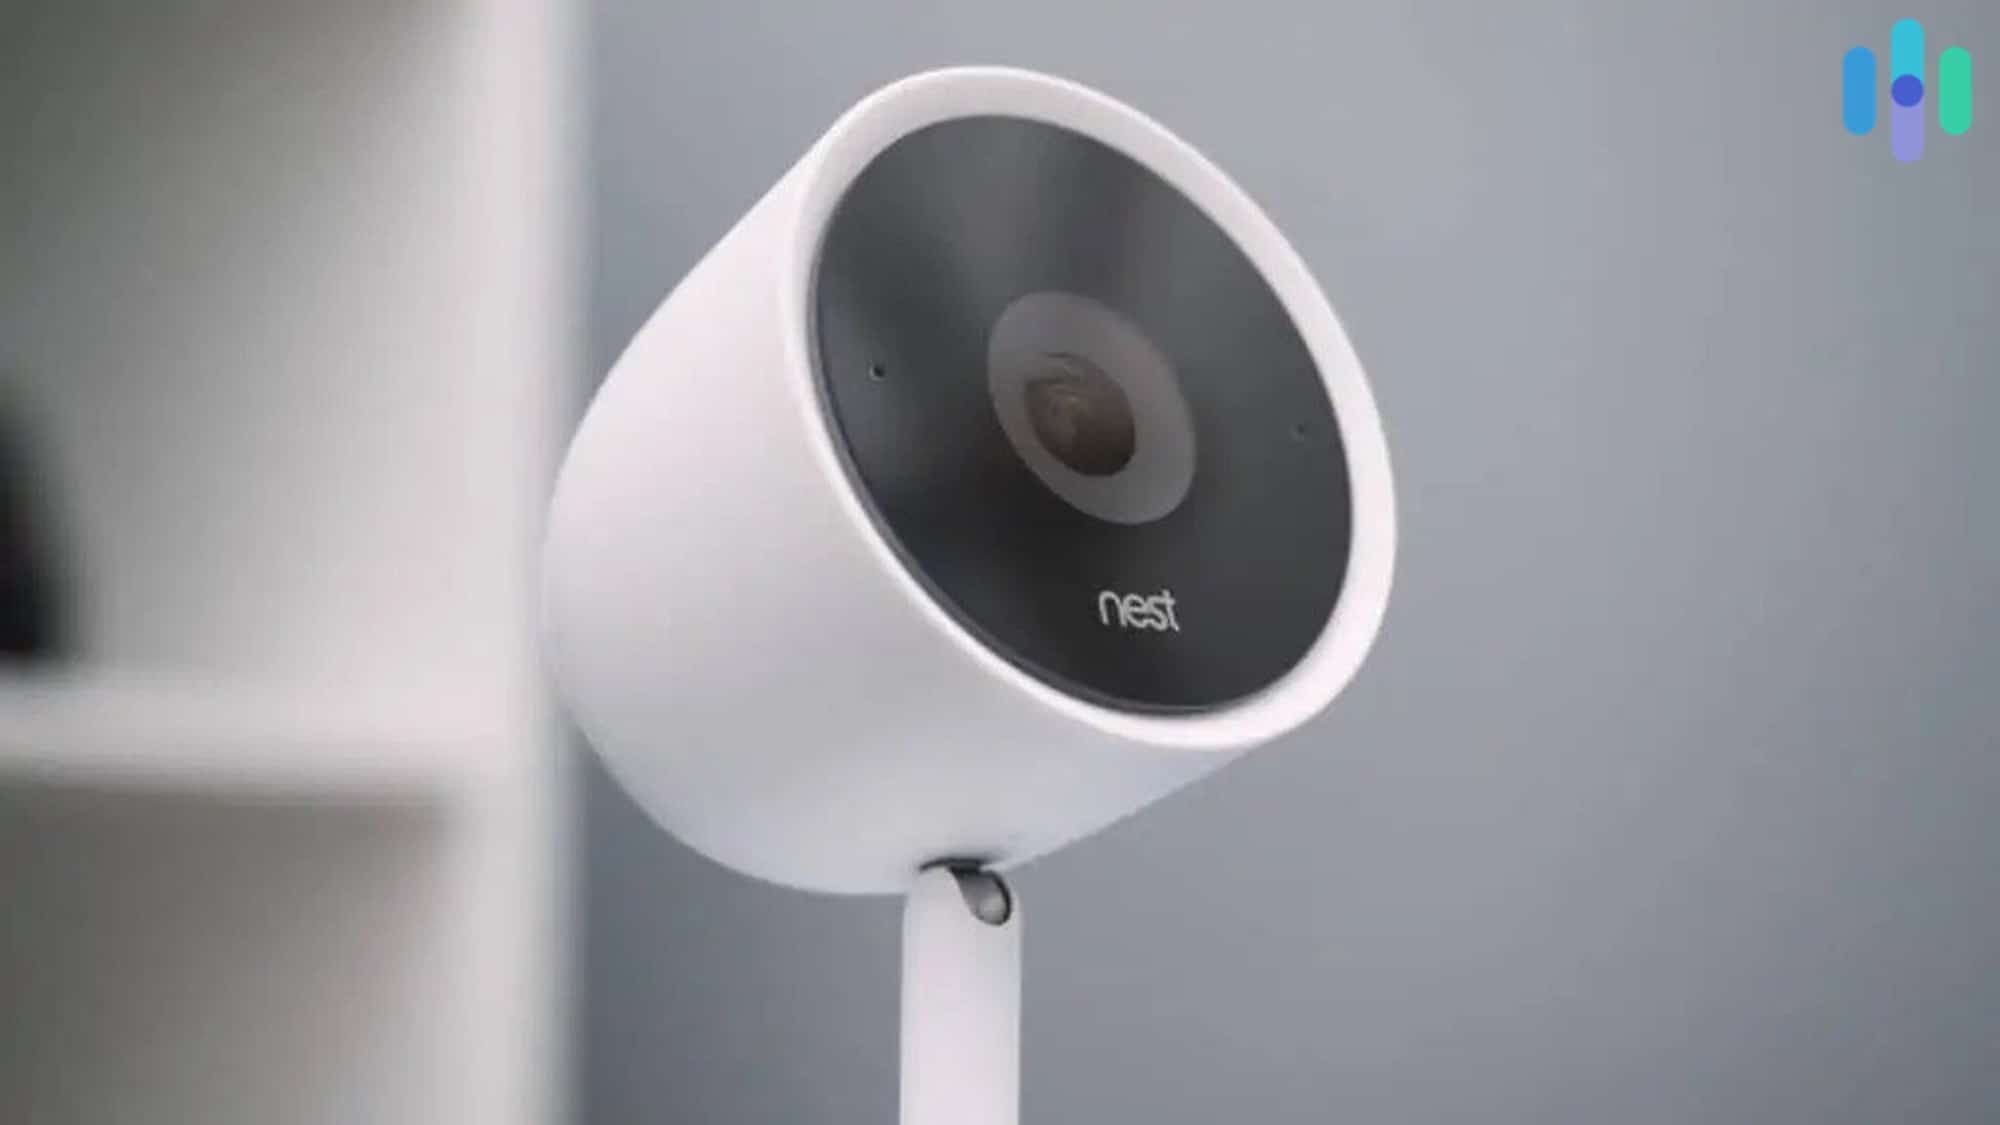 Advancements in surveillance cameras